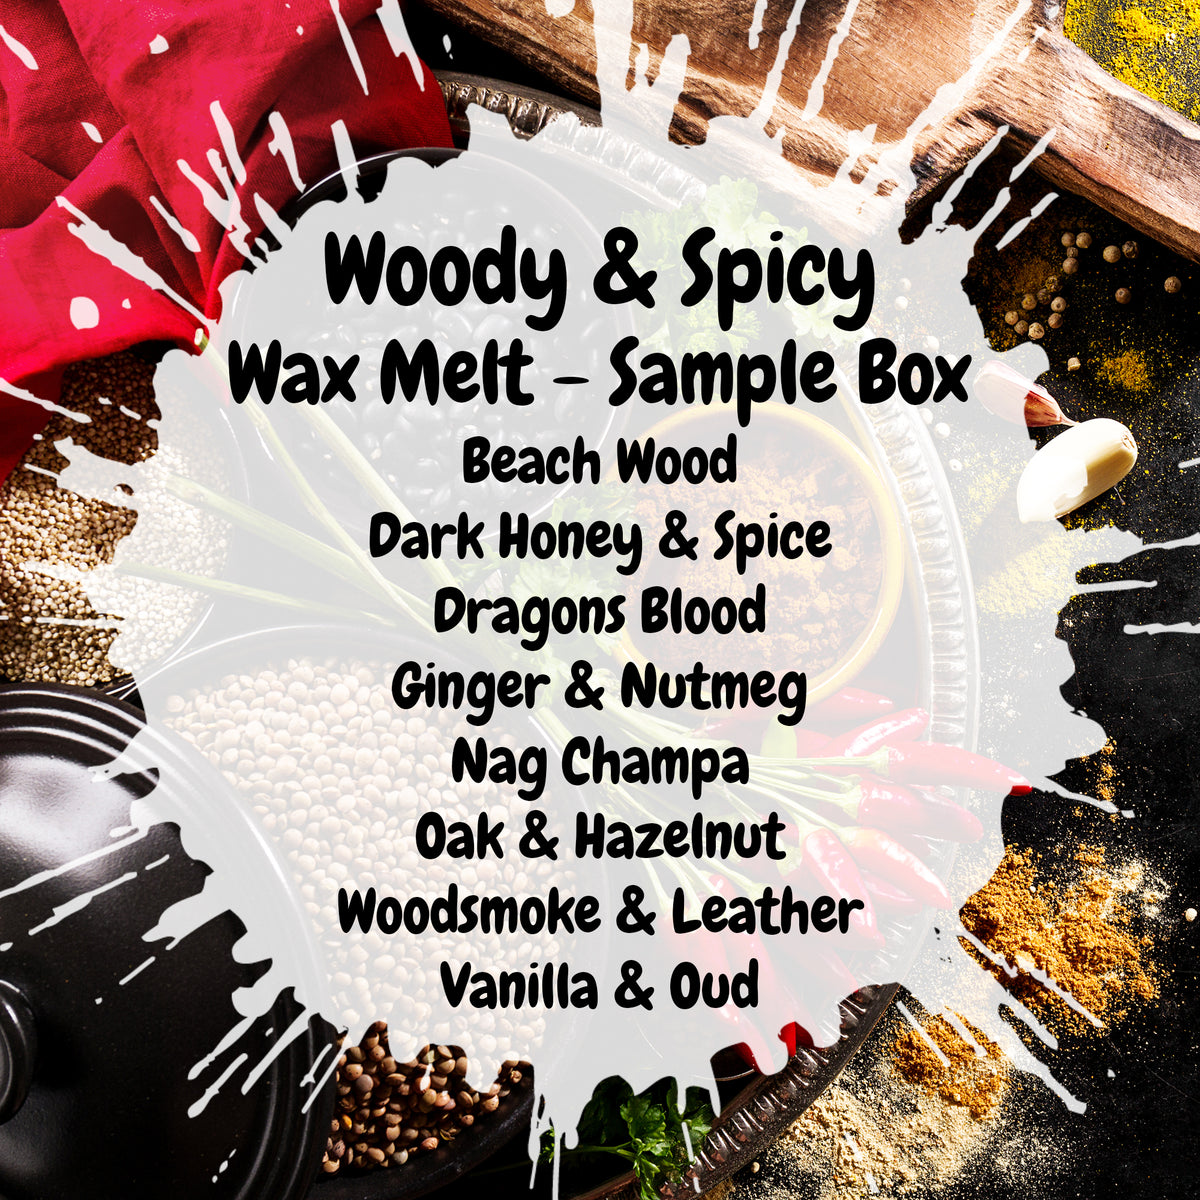 Woody & Spicy Wax Melt Sample Box